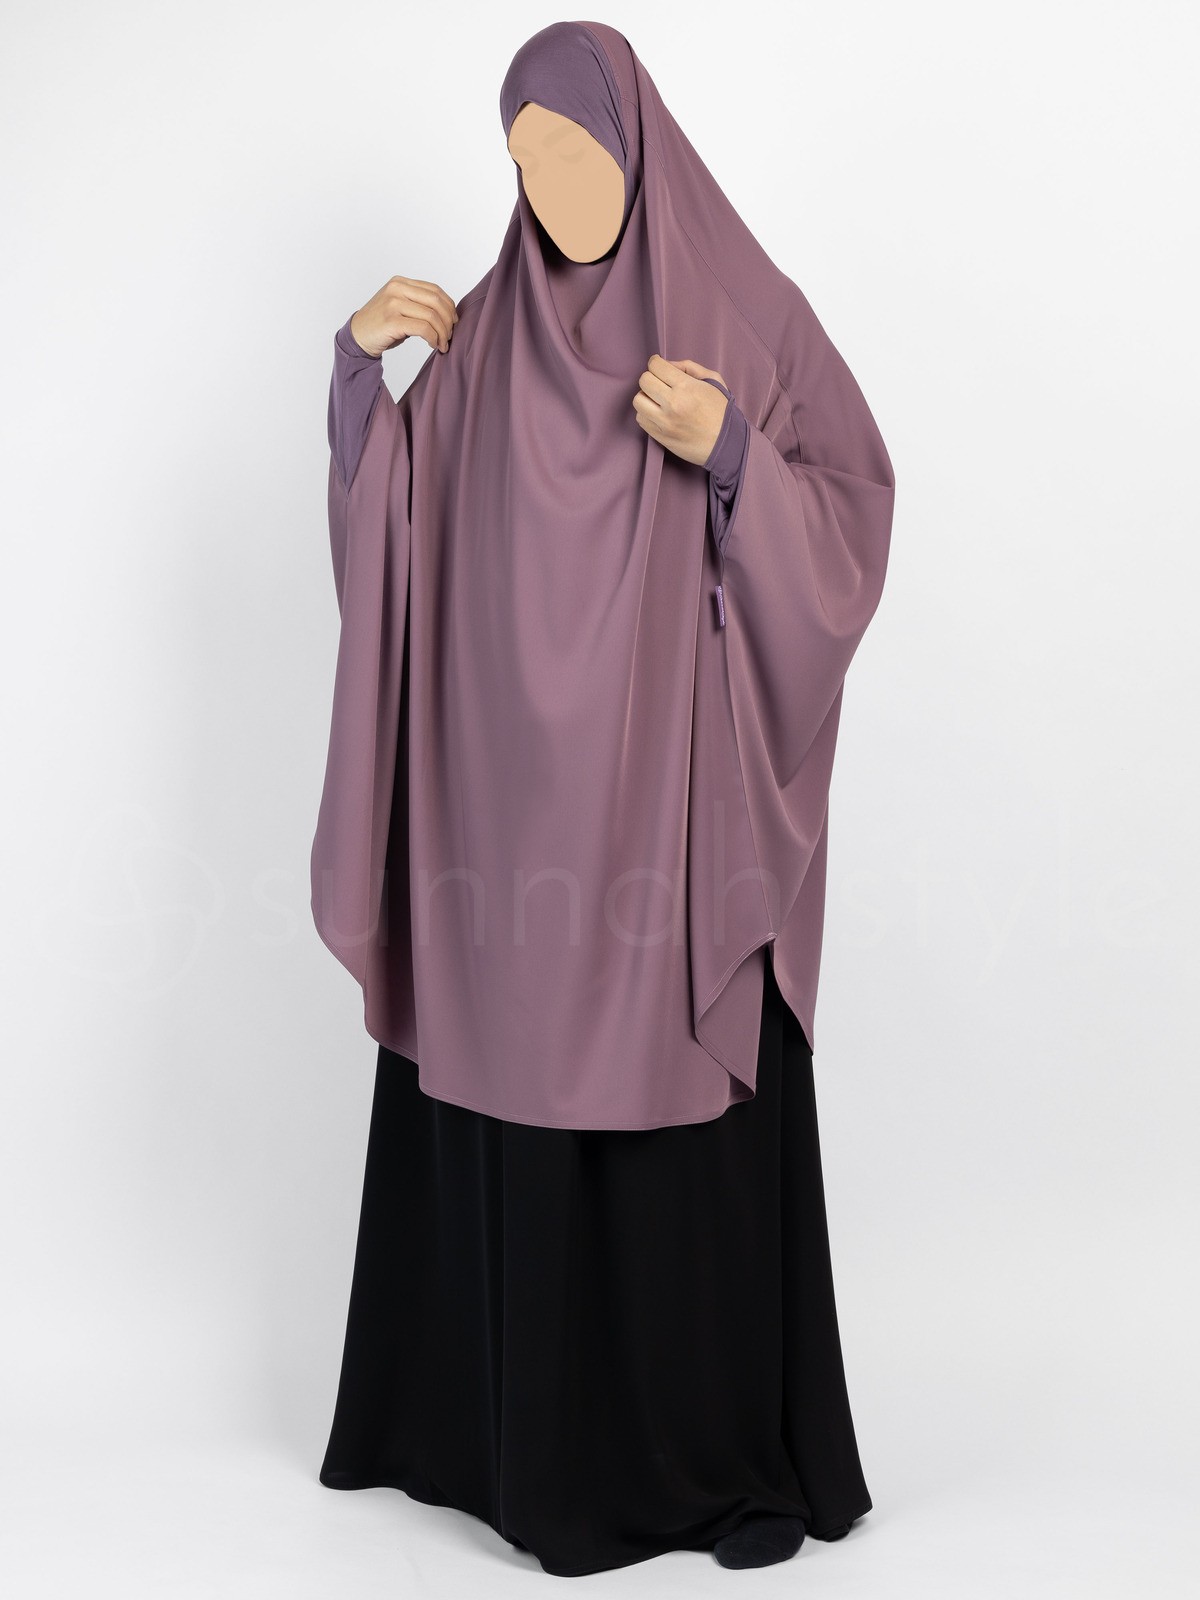 Sunnah Style - Signature Jilbab Top - Knee Length (Mauve)